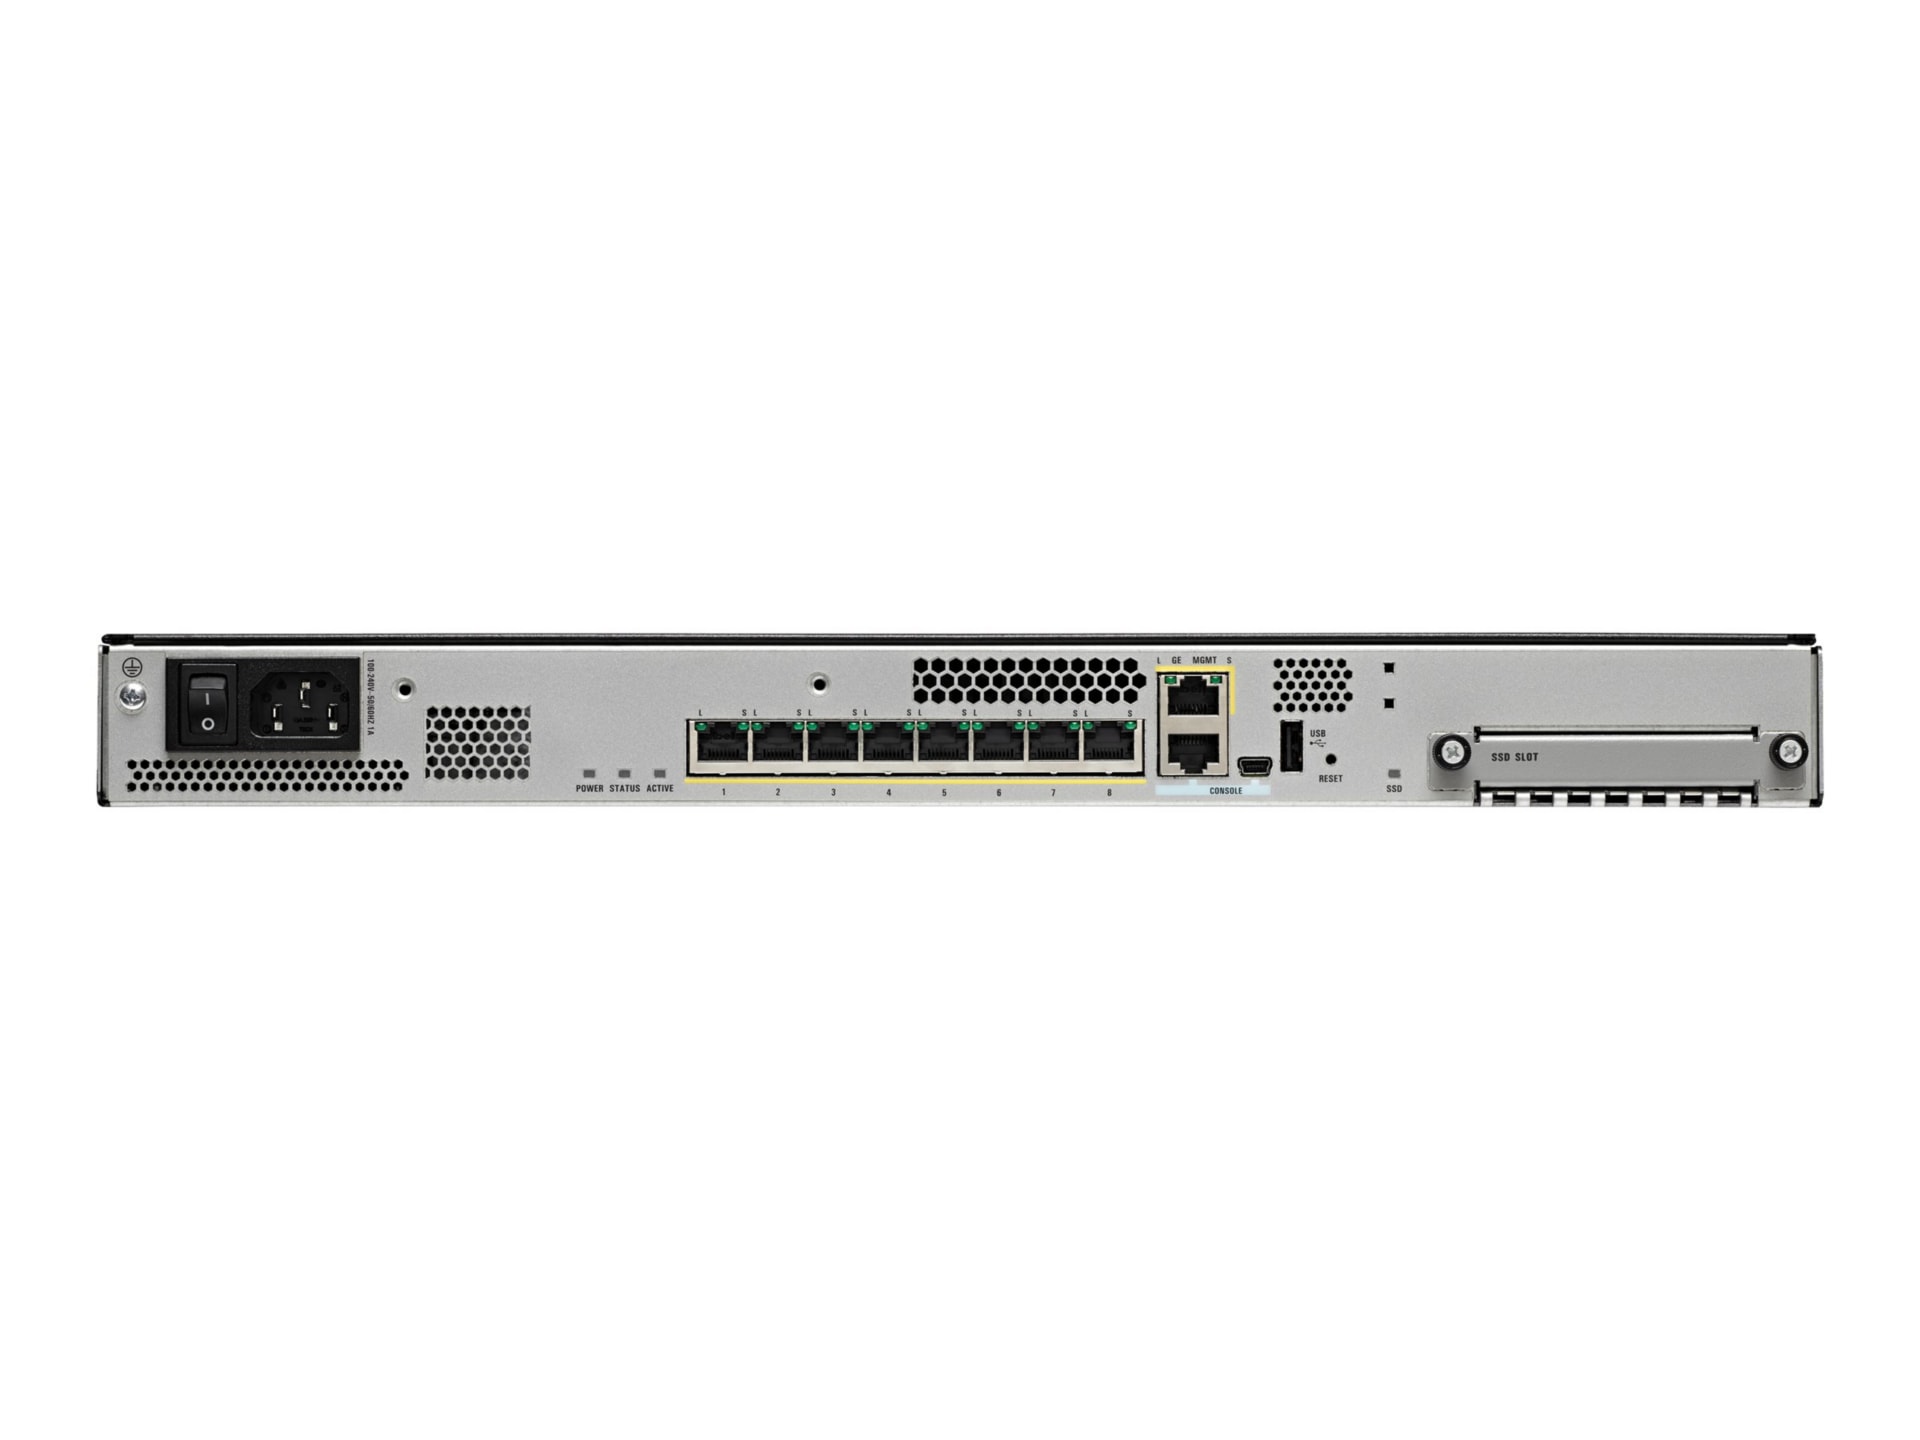 Cisco ASA 5508-X with Firepower Threat Defense - security appliance